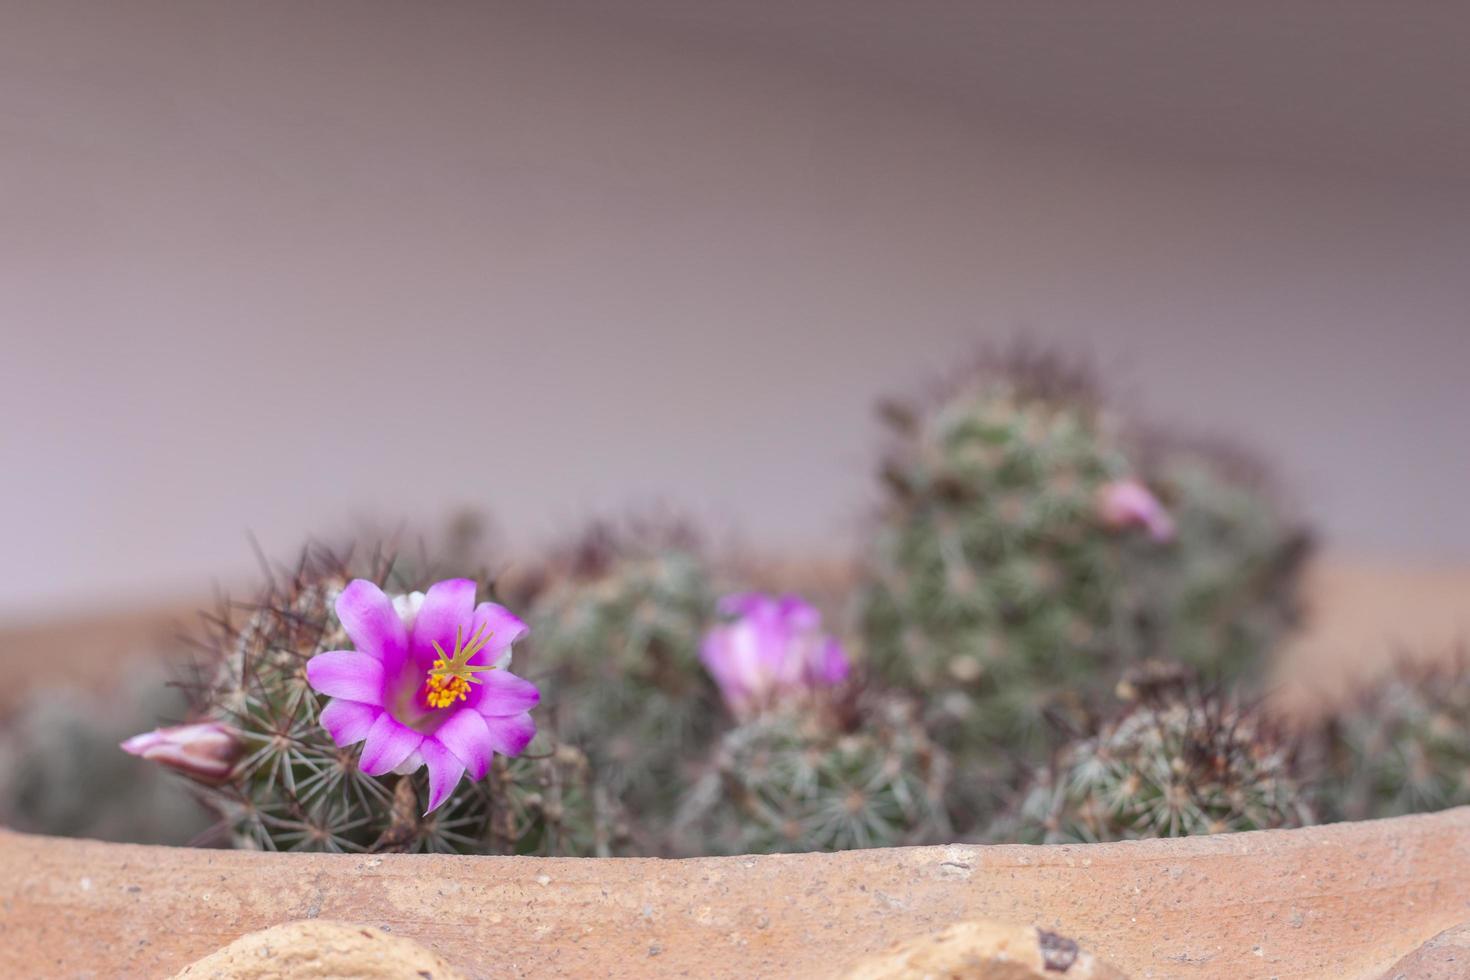 cactus o mammillaria scrippsiana con flor morada en maceta. foto